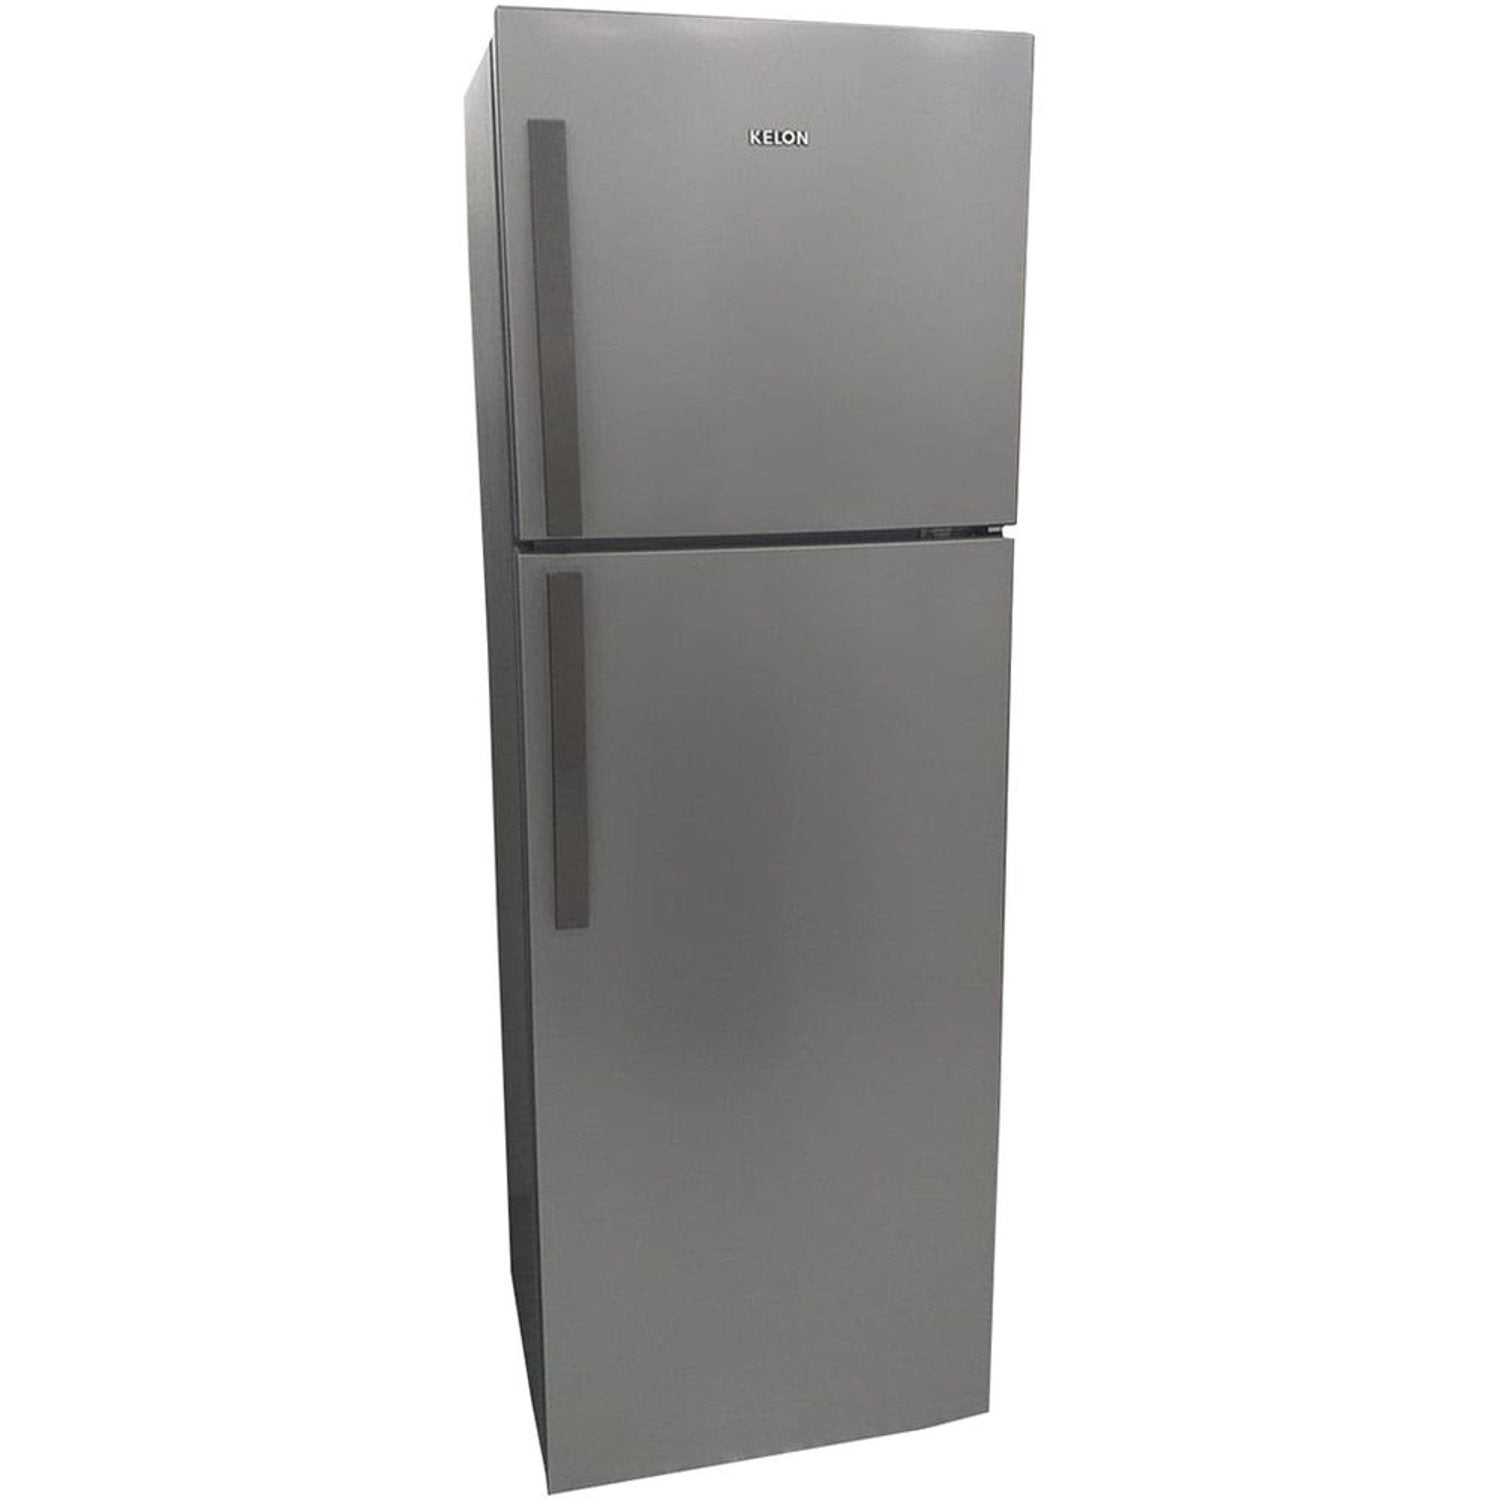 Kelon Top Mount Refrigerator | Capacity 328L | Color Silver | Best Home Appliances in Bahrain | Halabh